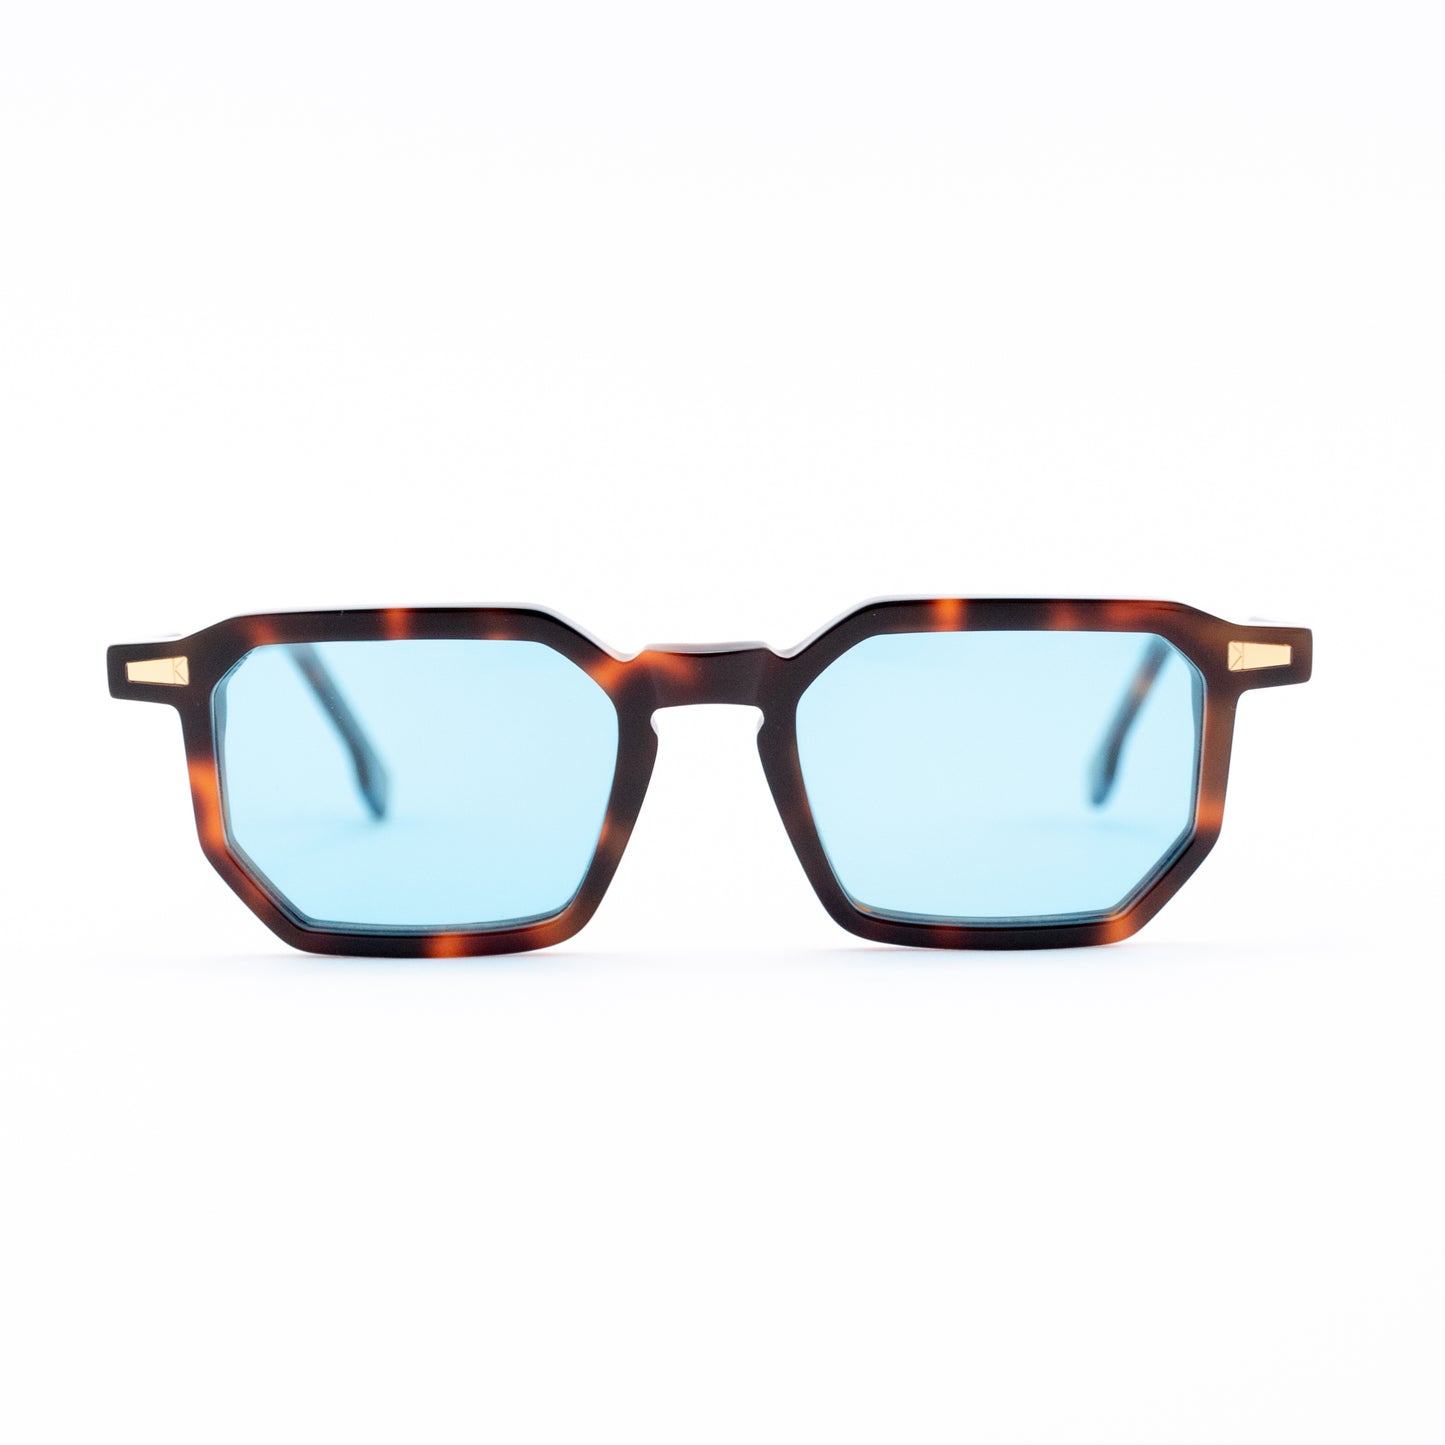 Idalgo: rectangular sunglasses